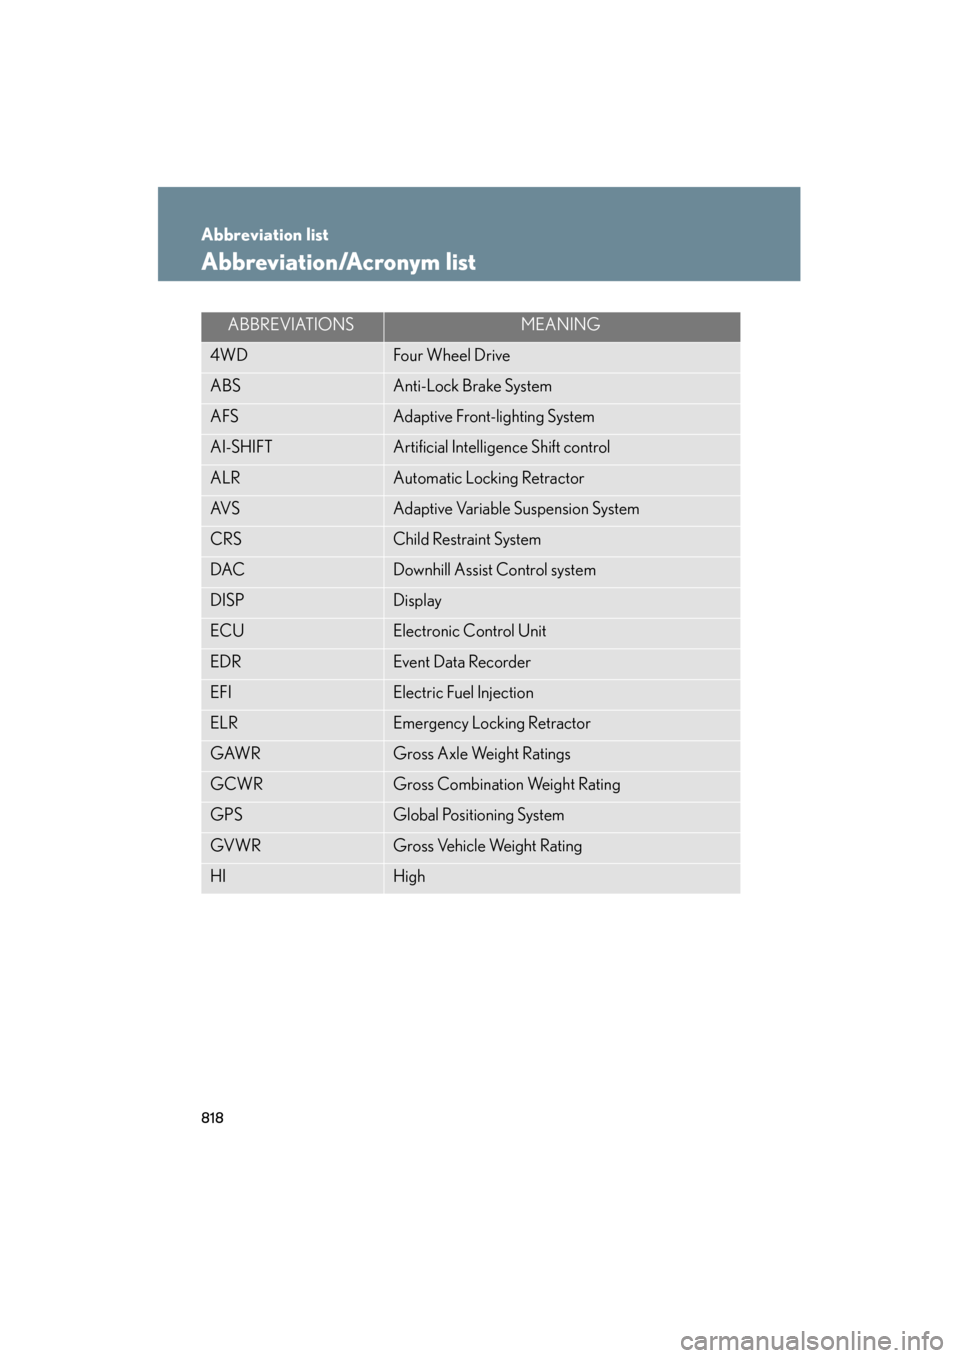 Lexus GX460 2012 User Guide 818
GX460_U.S.A. (OM60J00U)
Abbreviation list
Abbreviation/Acronym list
ABBREVIATIONSMEANING
4WDFour Wheel Drive
ABSAnti-Lock Brake System
AFSAdaptive Front-lighting System
AI-SHIFTArtificial Intellig